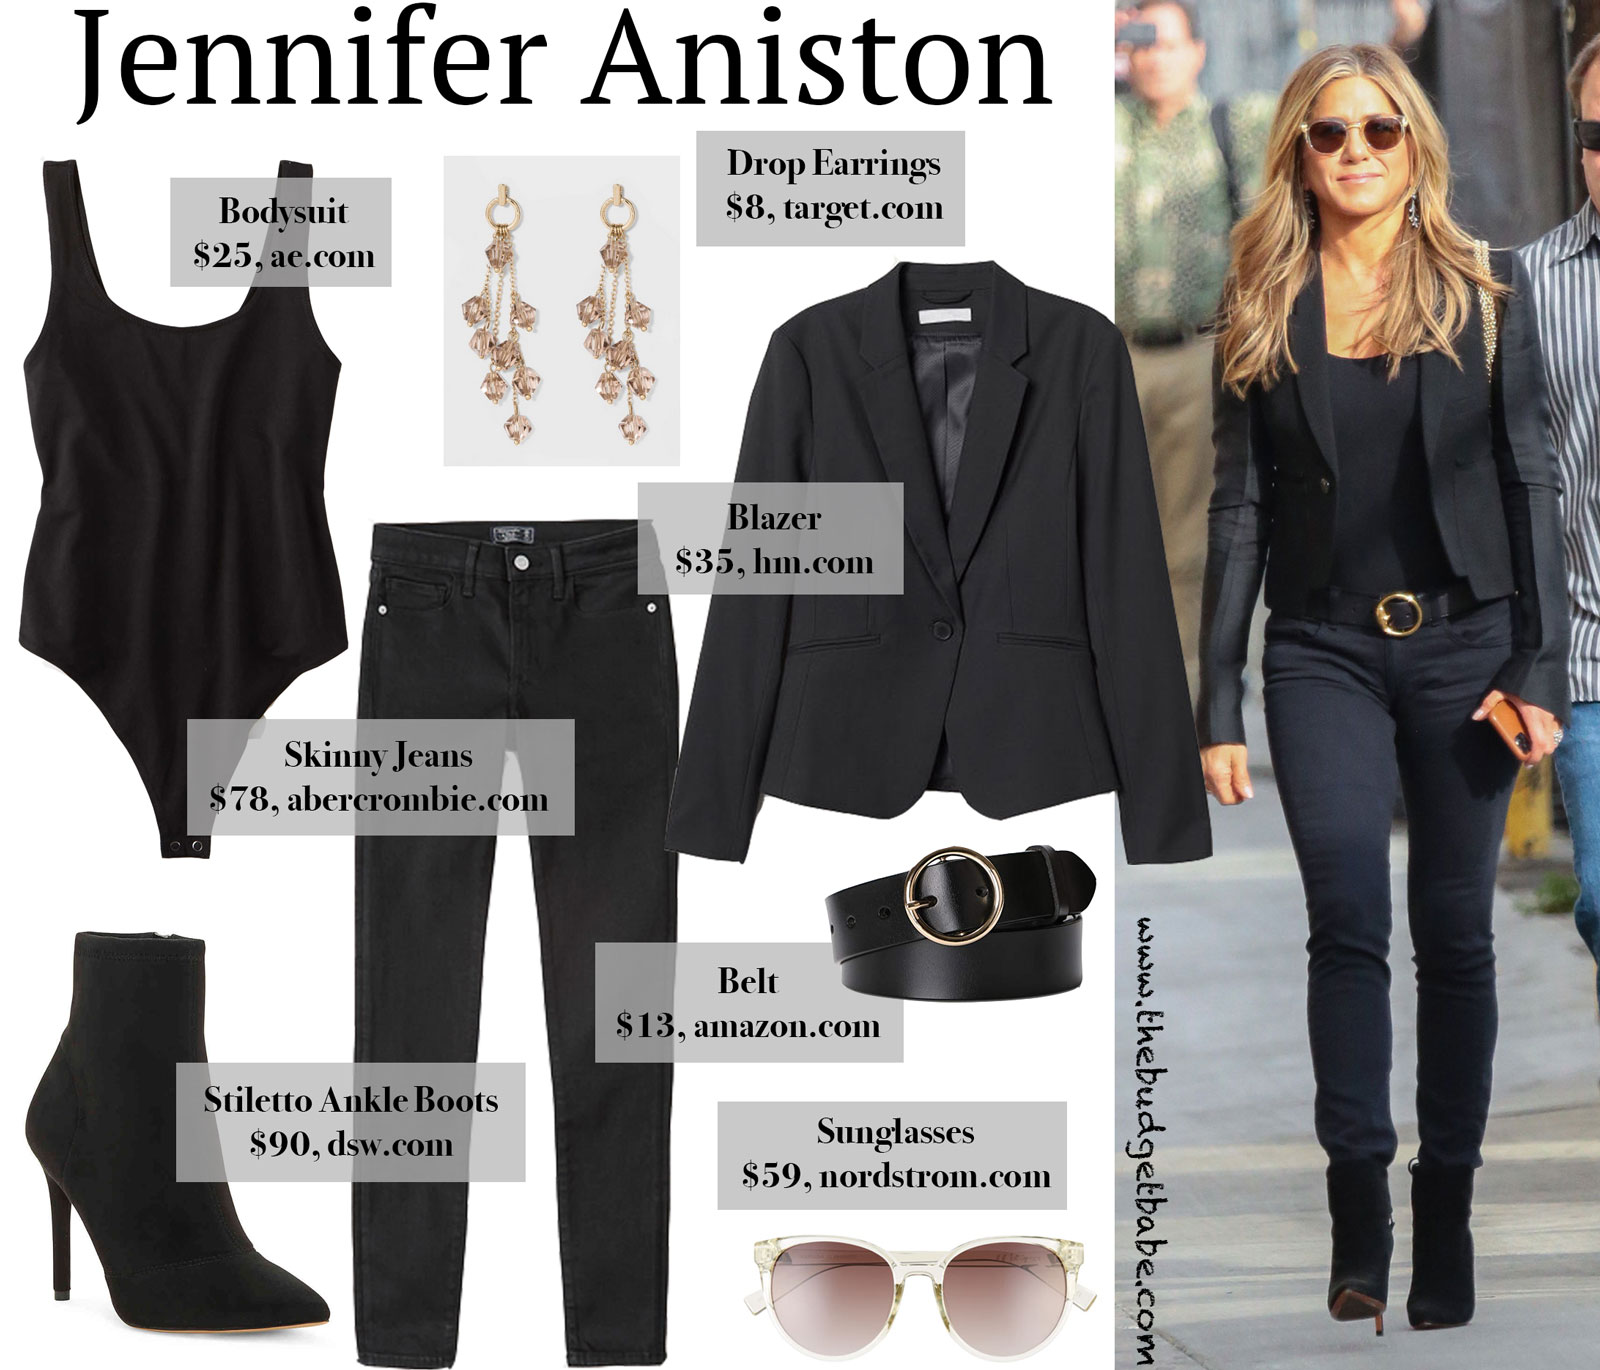 Jennifer Aniston All Black Look for Less